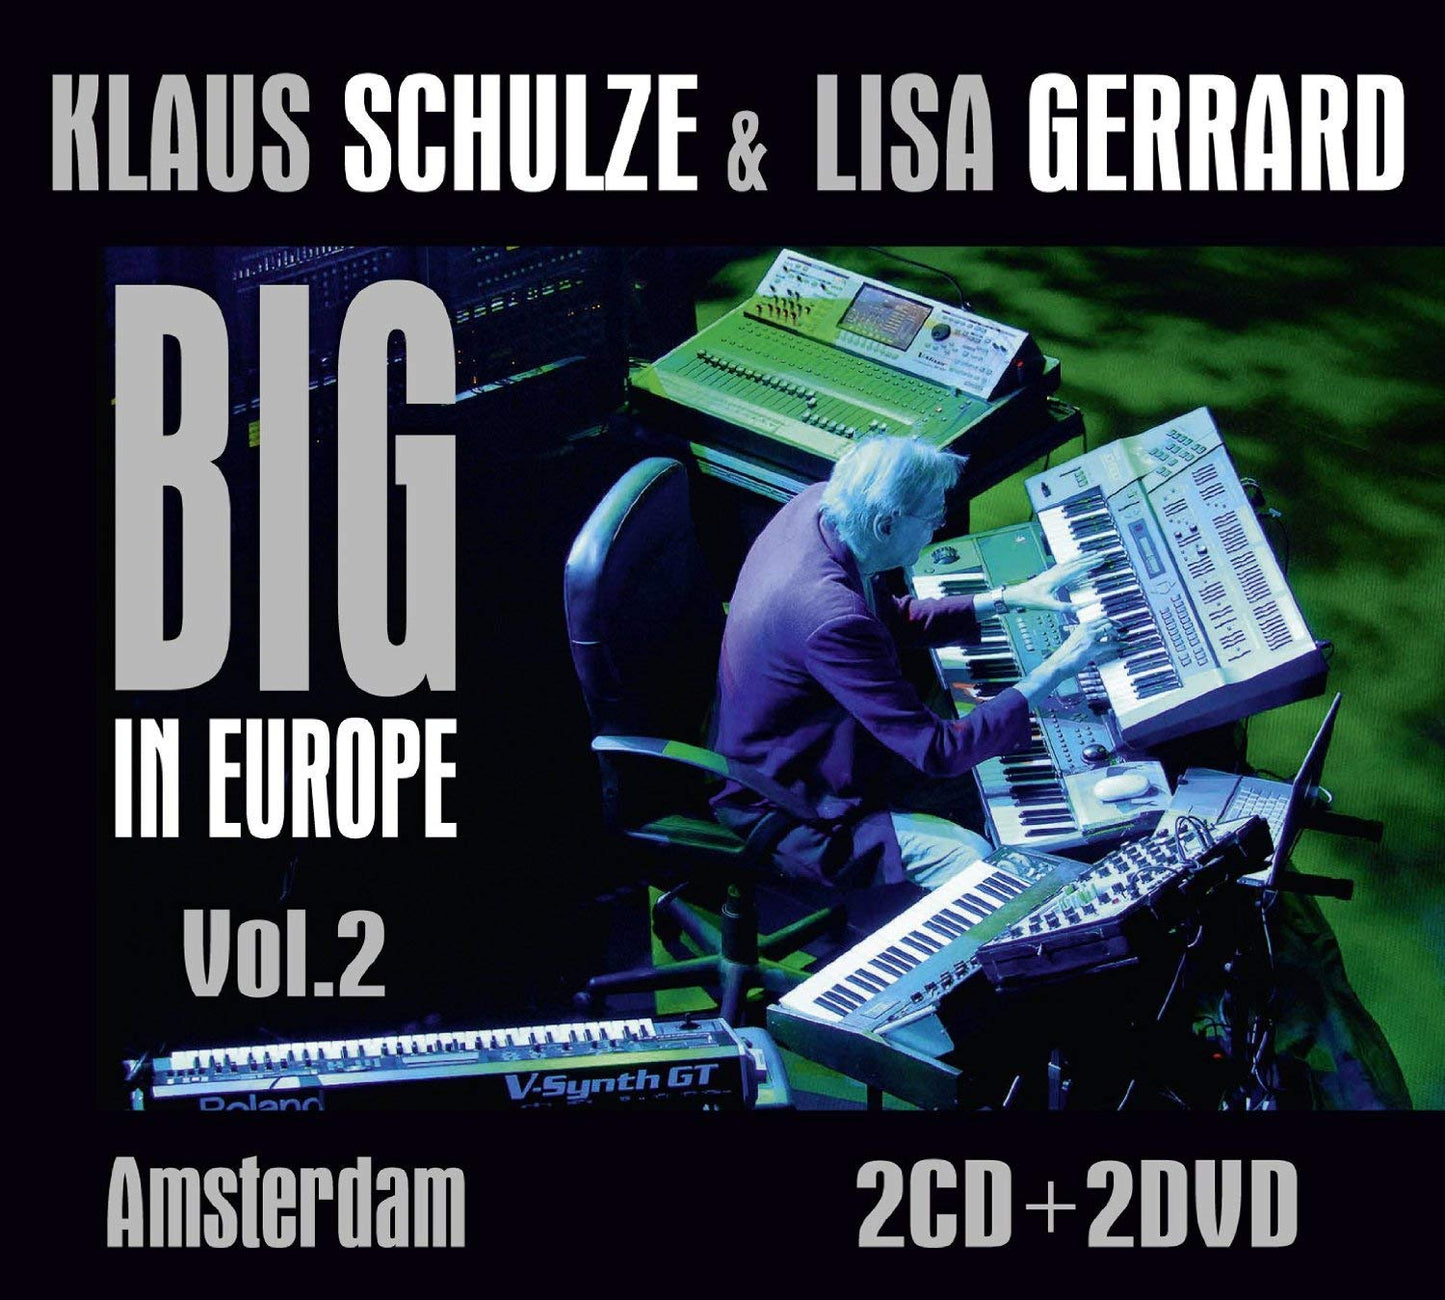 Klaus Schulze & Lisa Gerrard - 2CD/2DVD